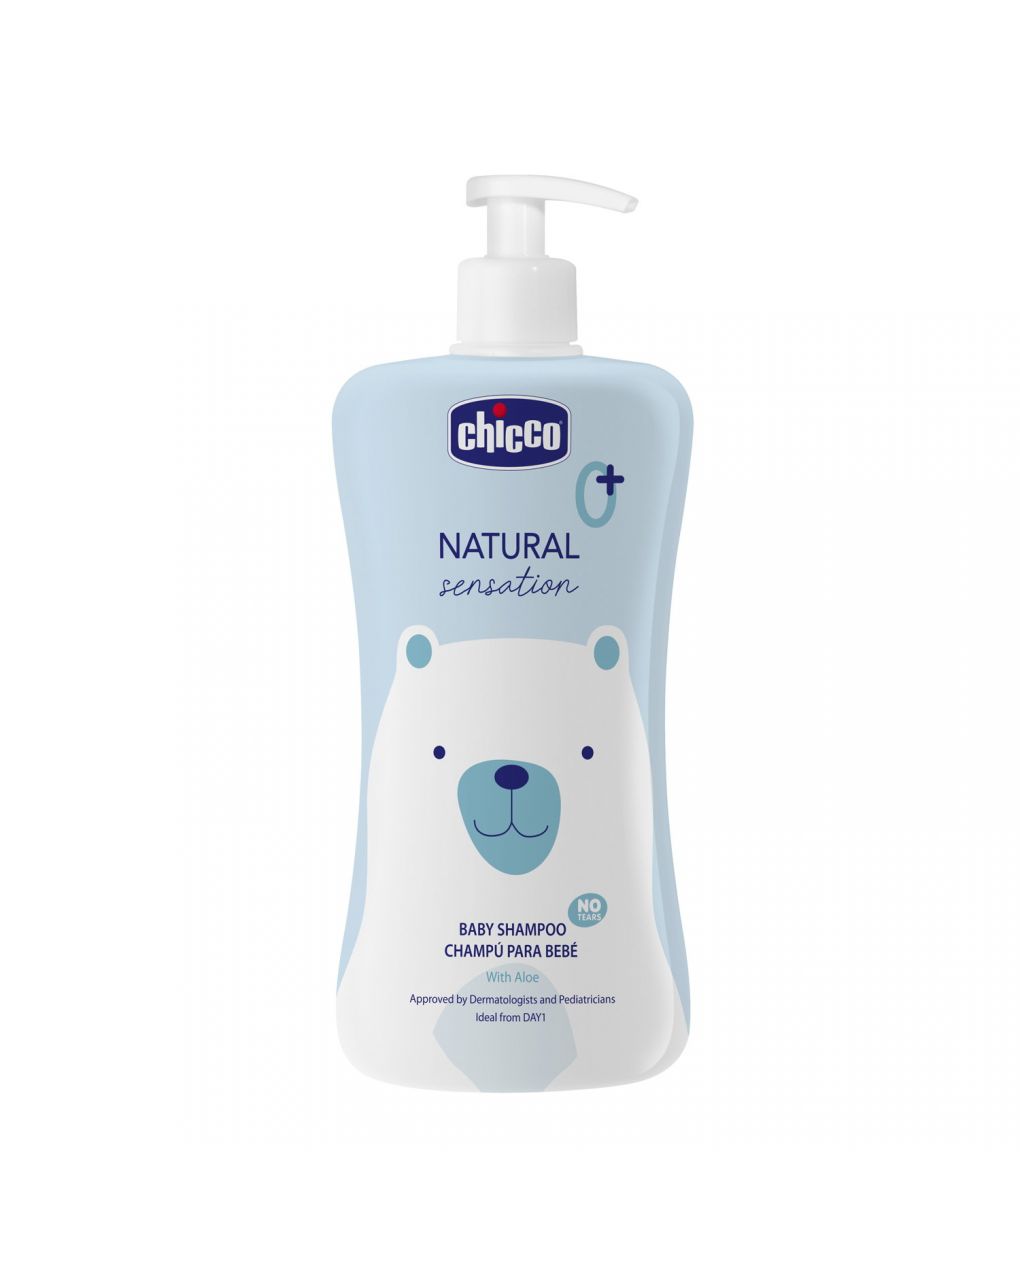 Baby shampoo natural sensation 500ml - chicco